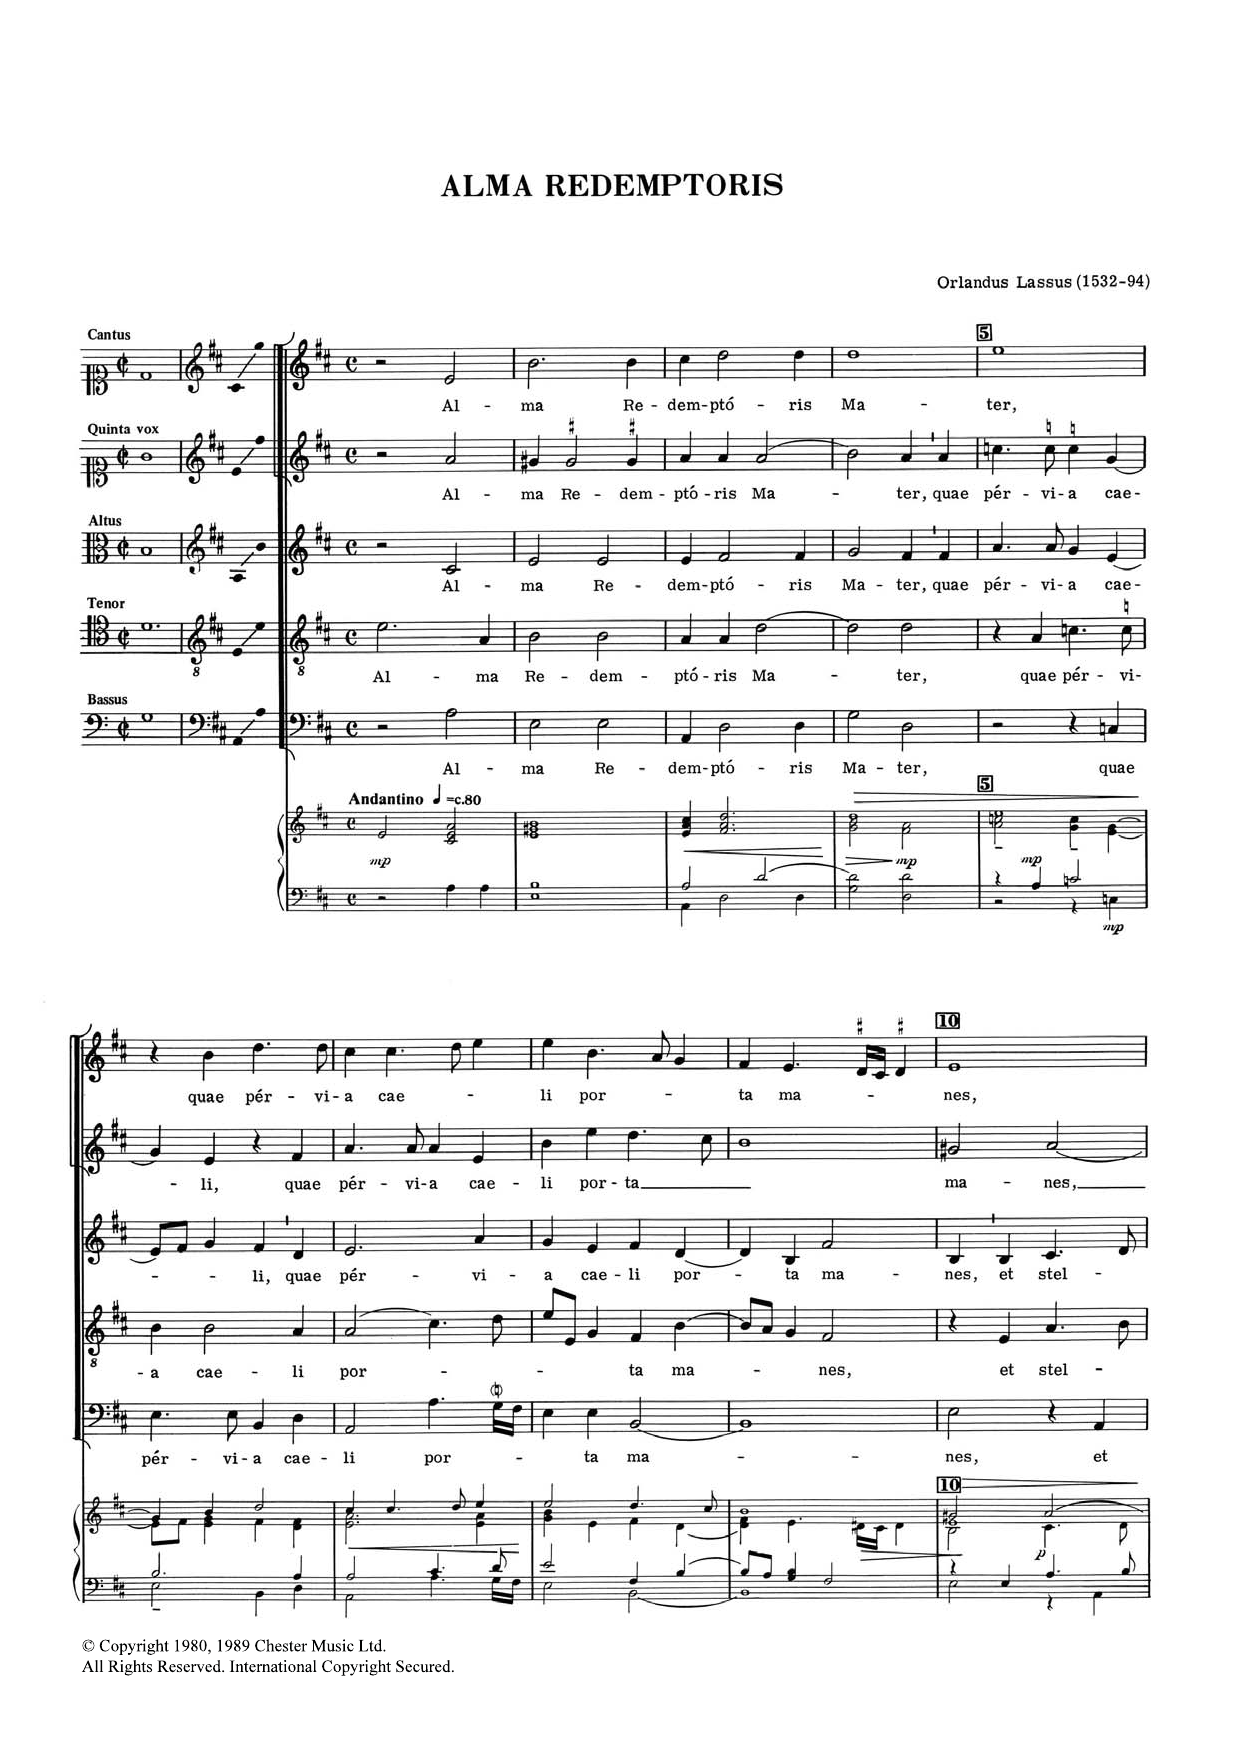 Download Orlandus Lassus Alma Redemptoris Sheet Music